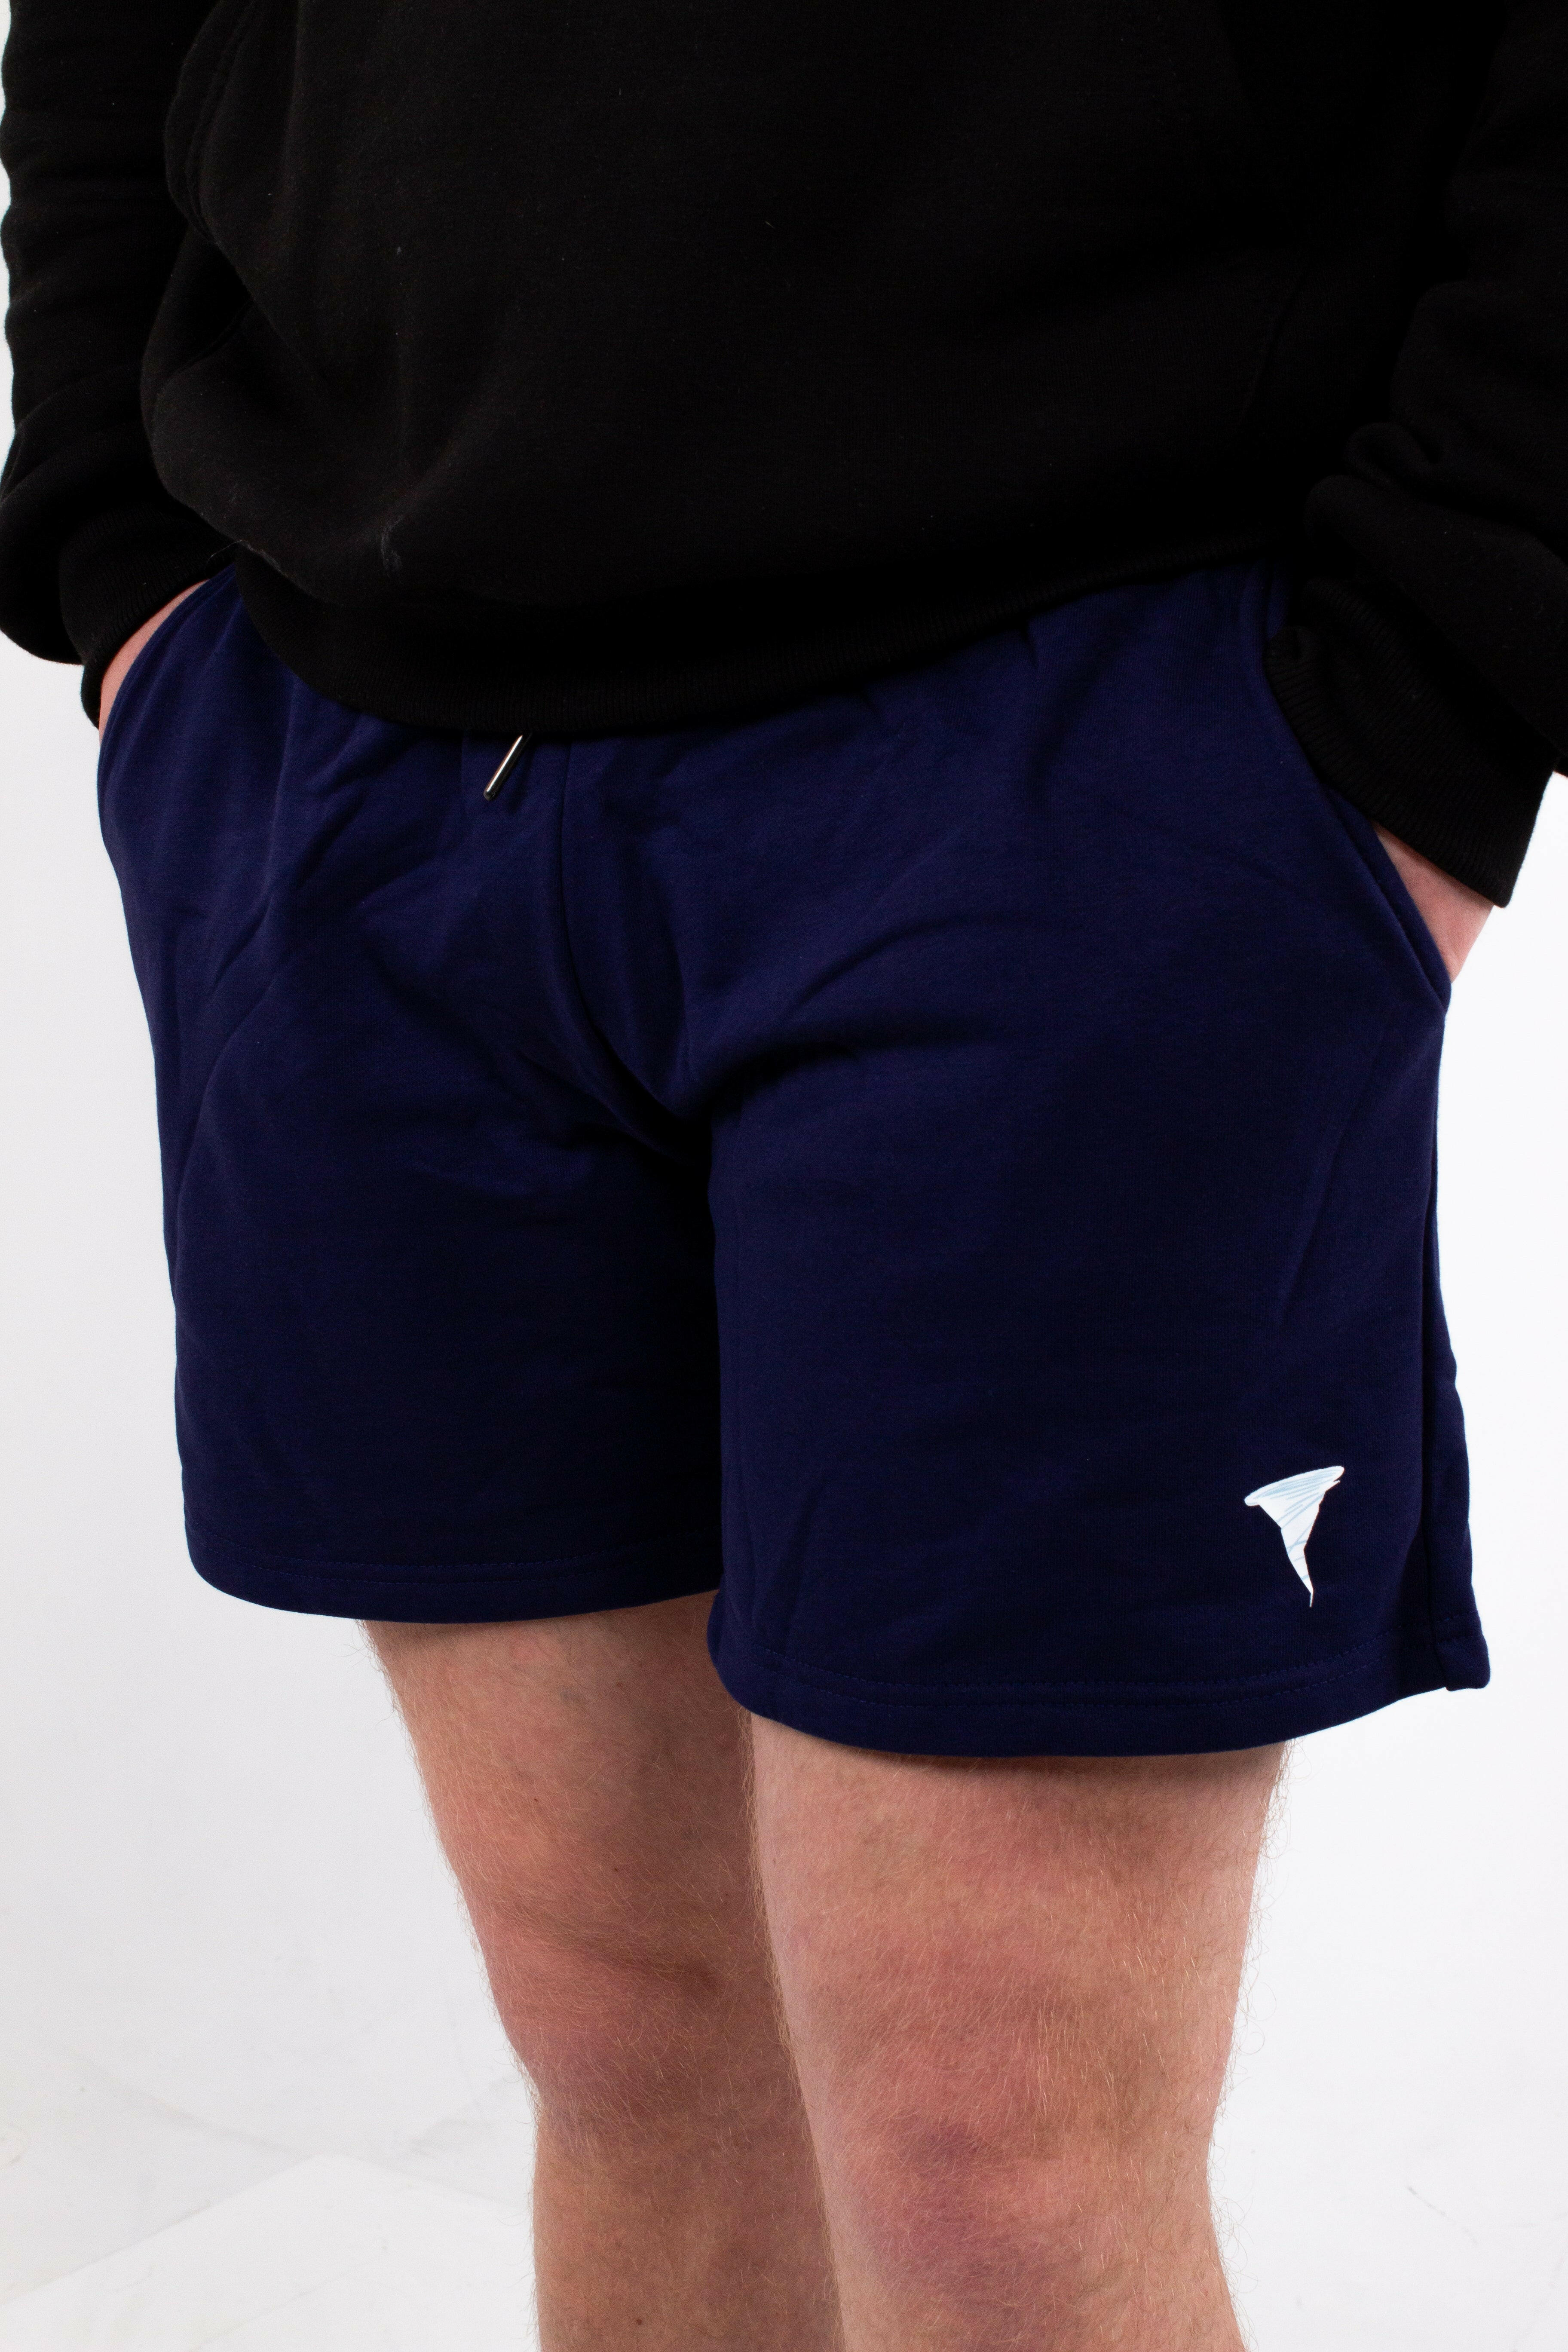 Blue navy workout shorts.